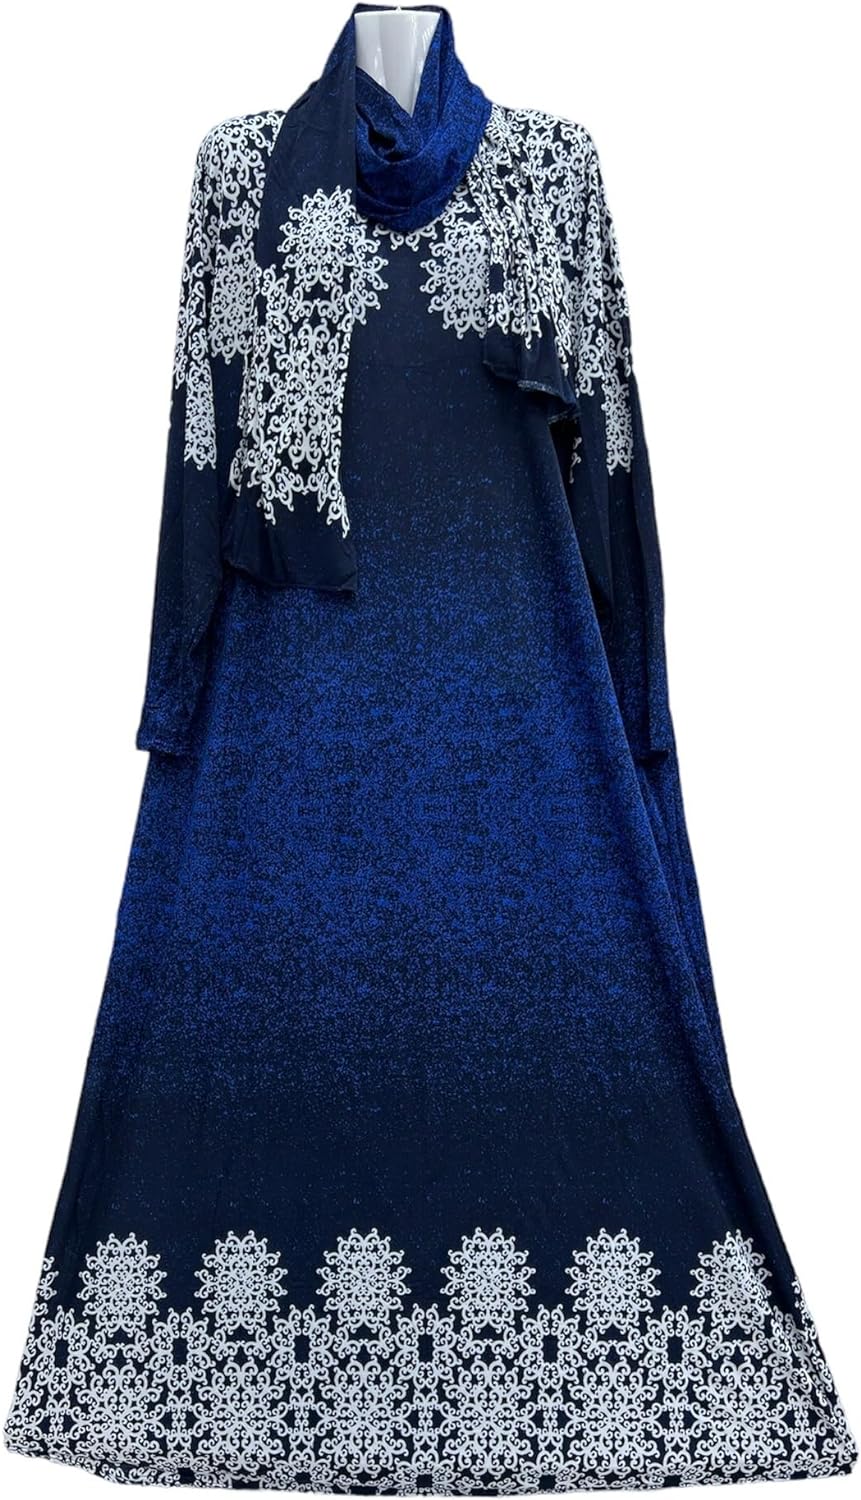 FindsCorner - Tarha Abaya Prayer Dress Prayer Dress for Muslim Women, Soft Breathable Elastic Super Comfy Clothe Material (Navy Blue), One Size